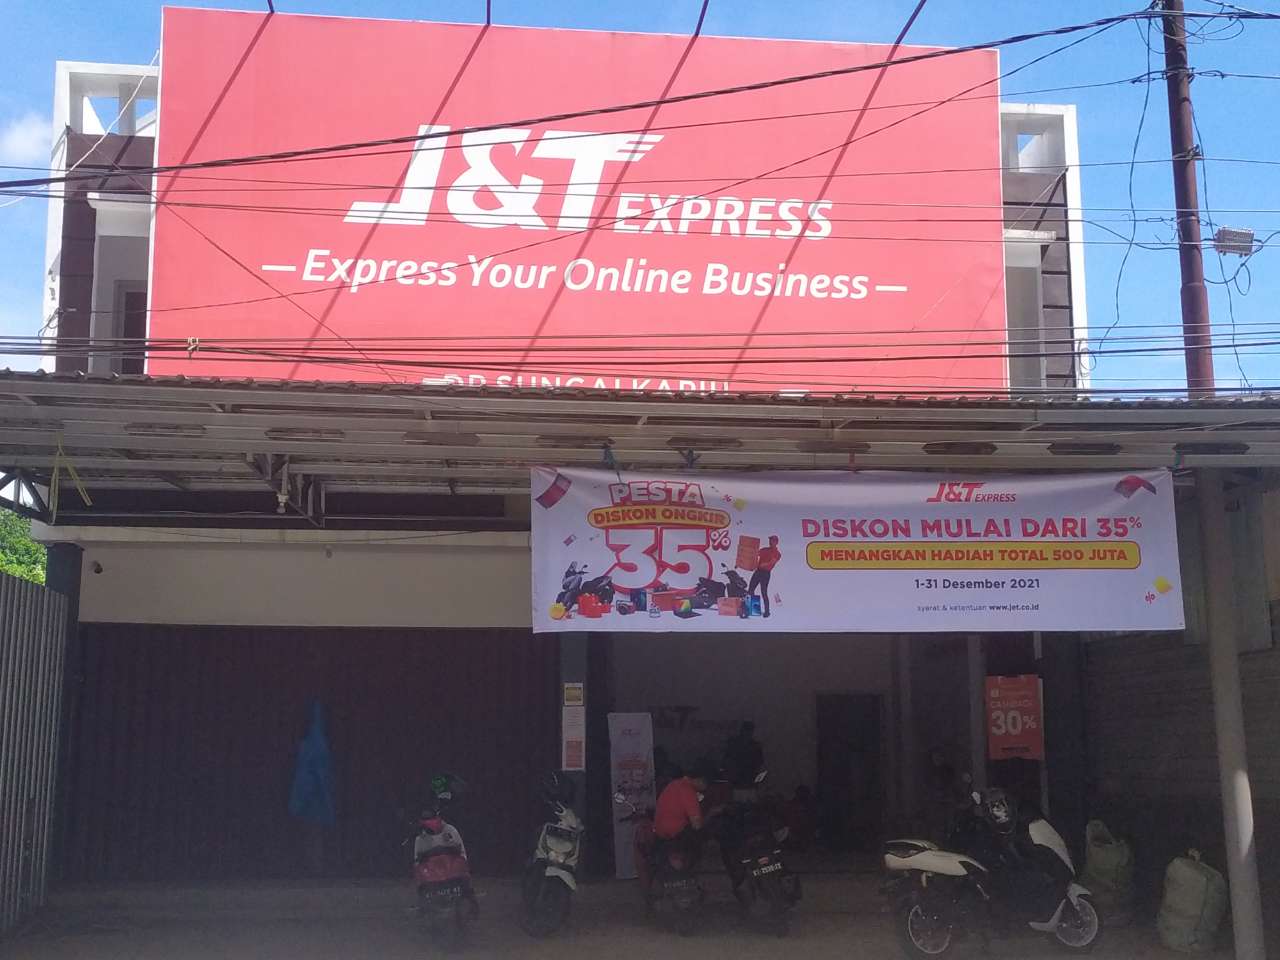 J&t Express Sungai_kapih Photo